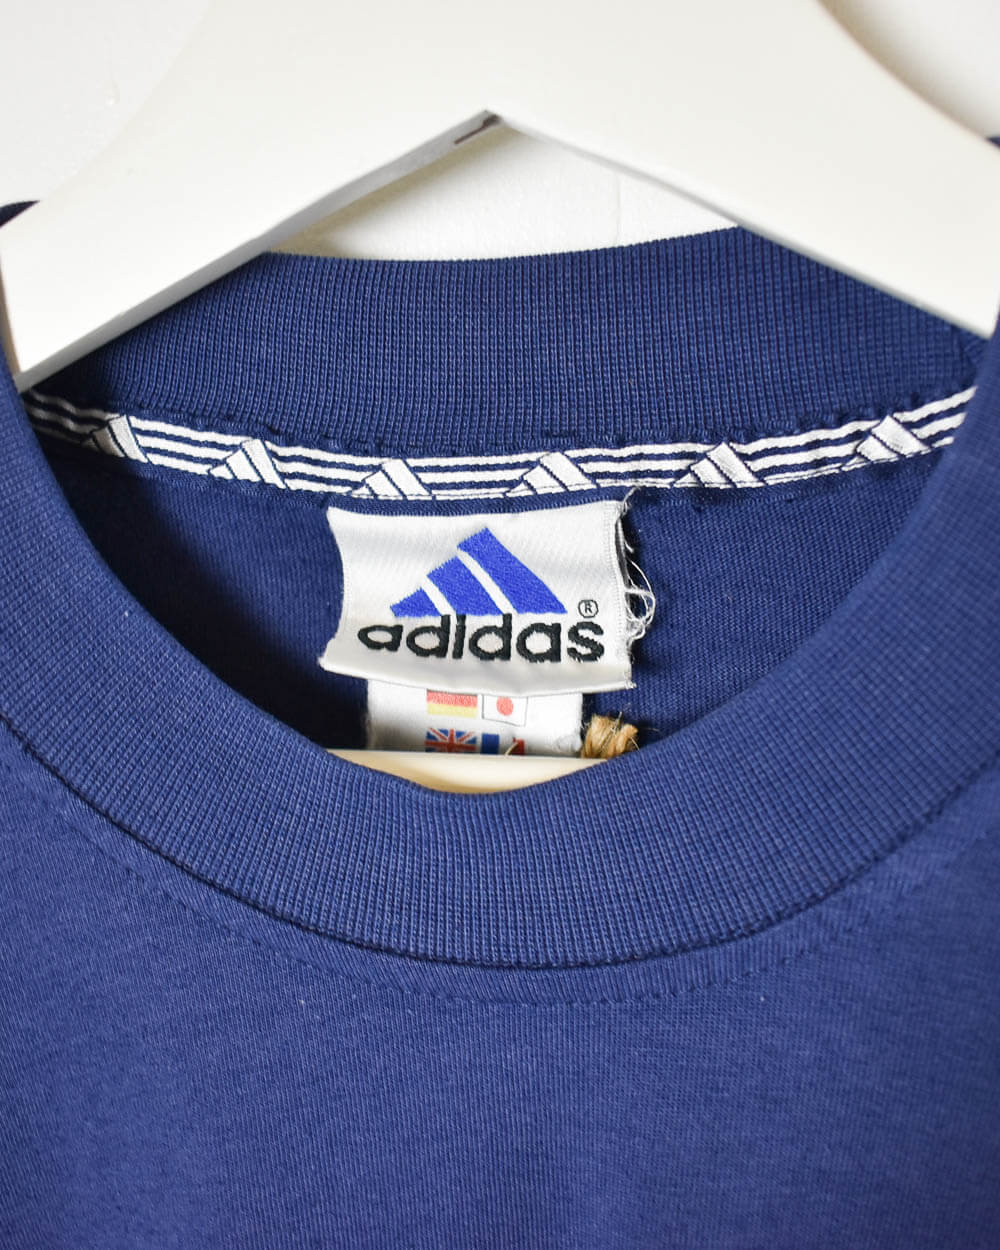 Blue Adidas Sweatshirt - Small